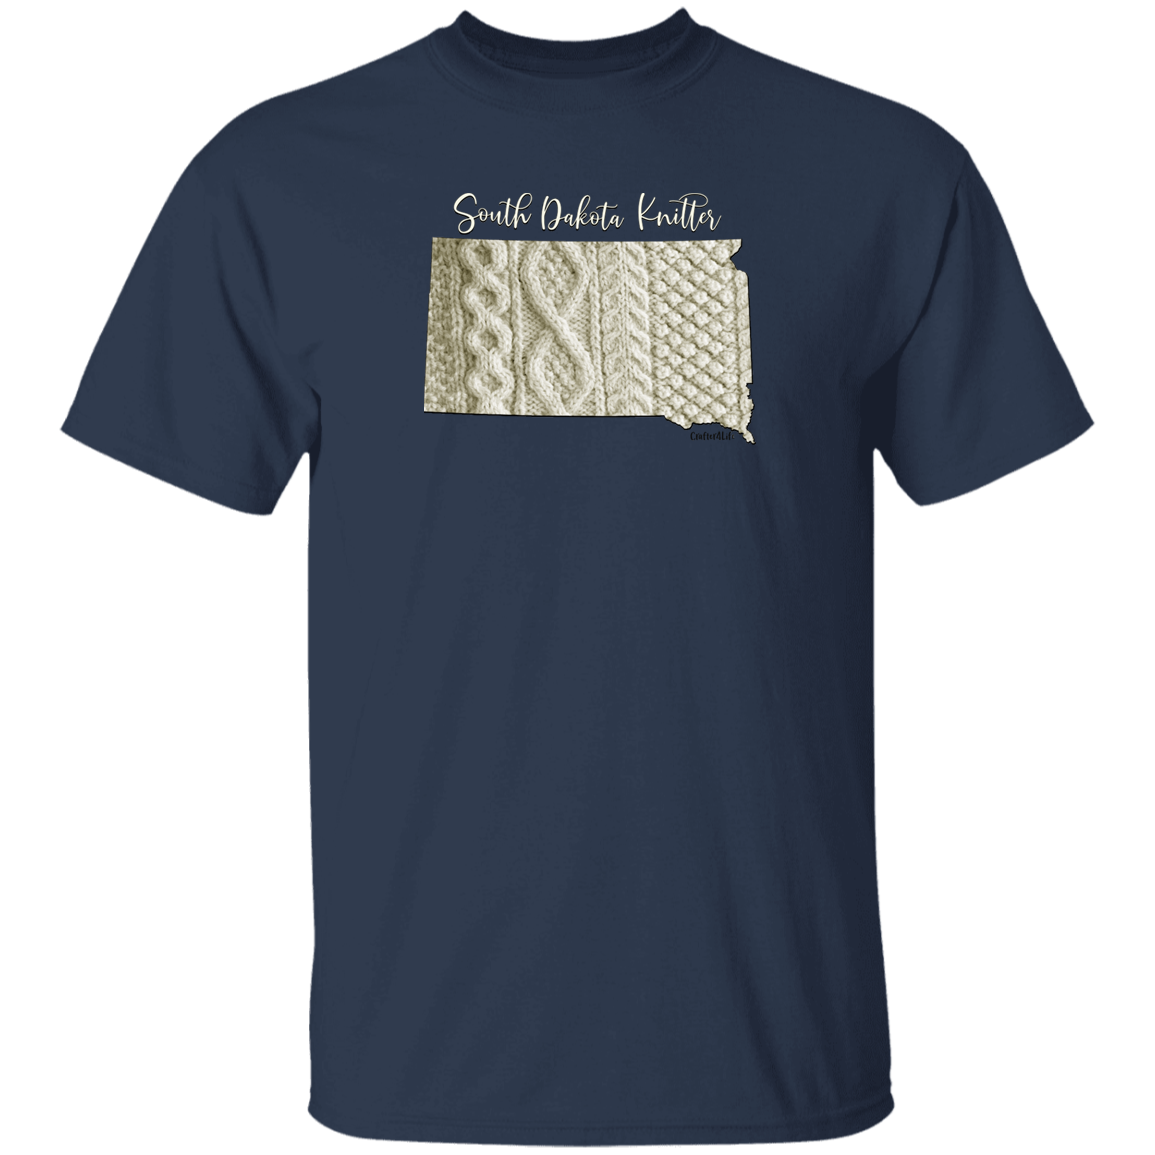 South Dakota Knitter Cotton T-Shirt